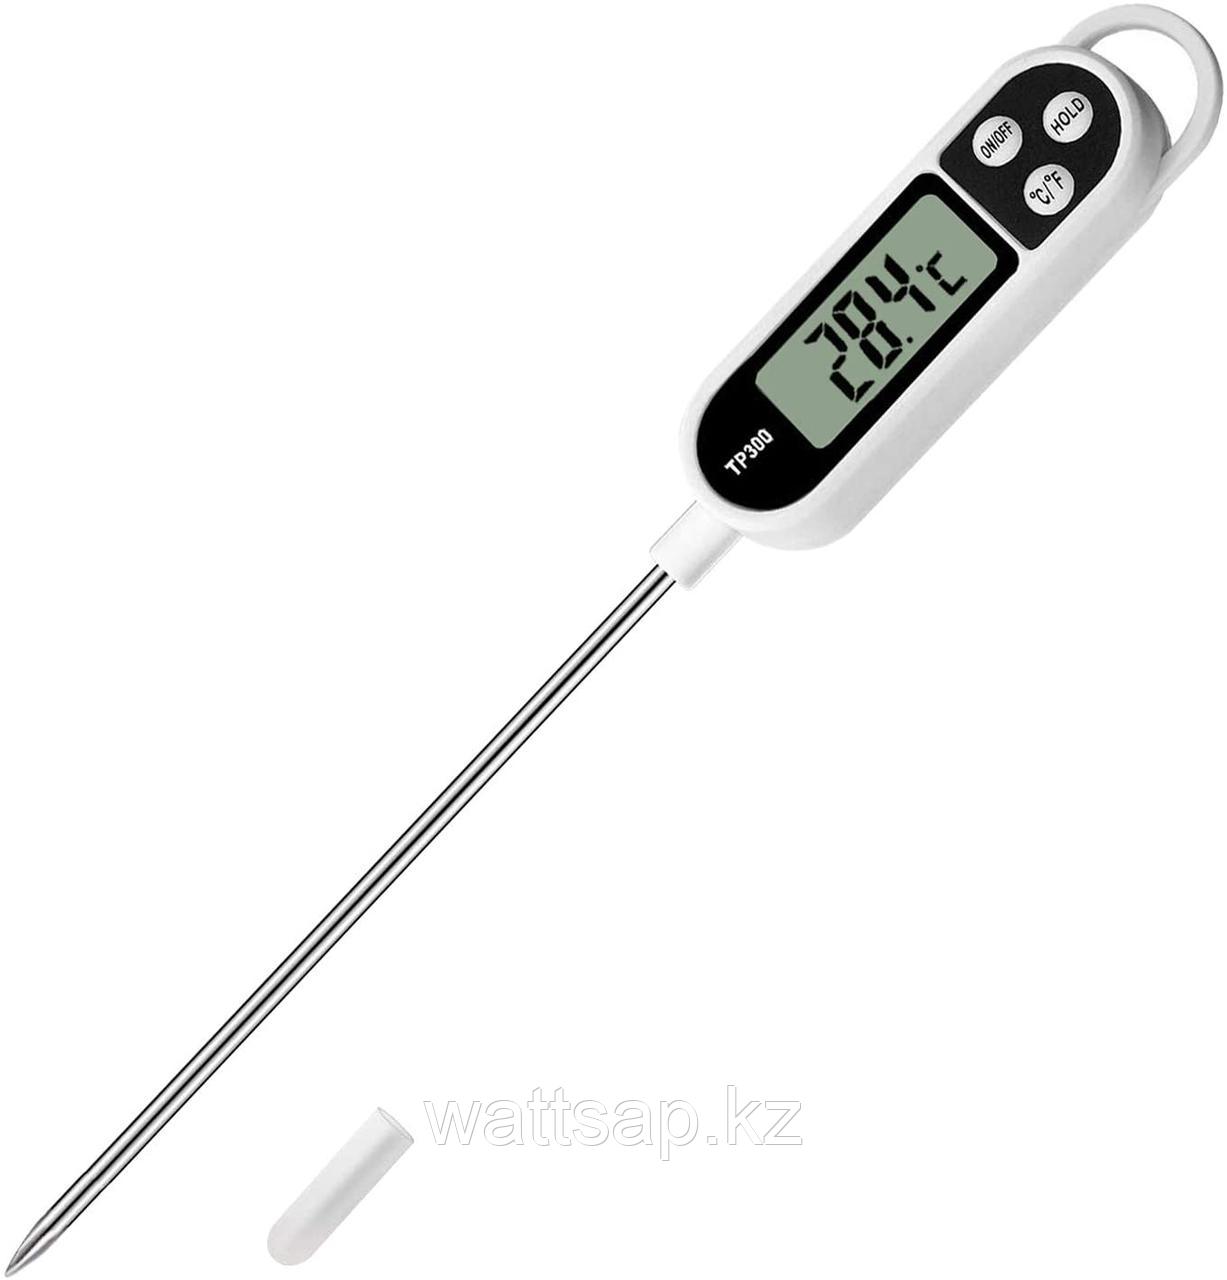 Электронный термометр - щуп NGL-FT01